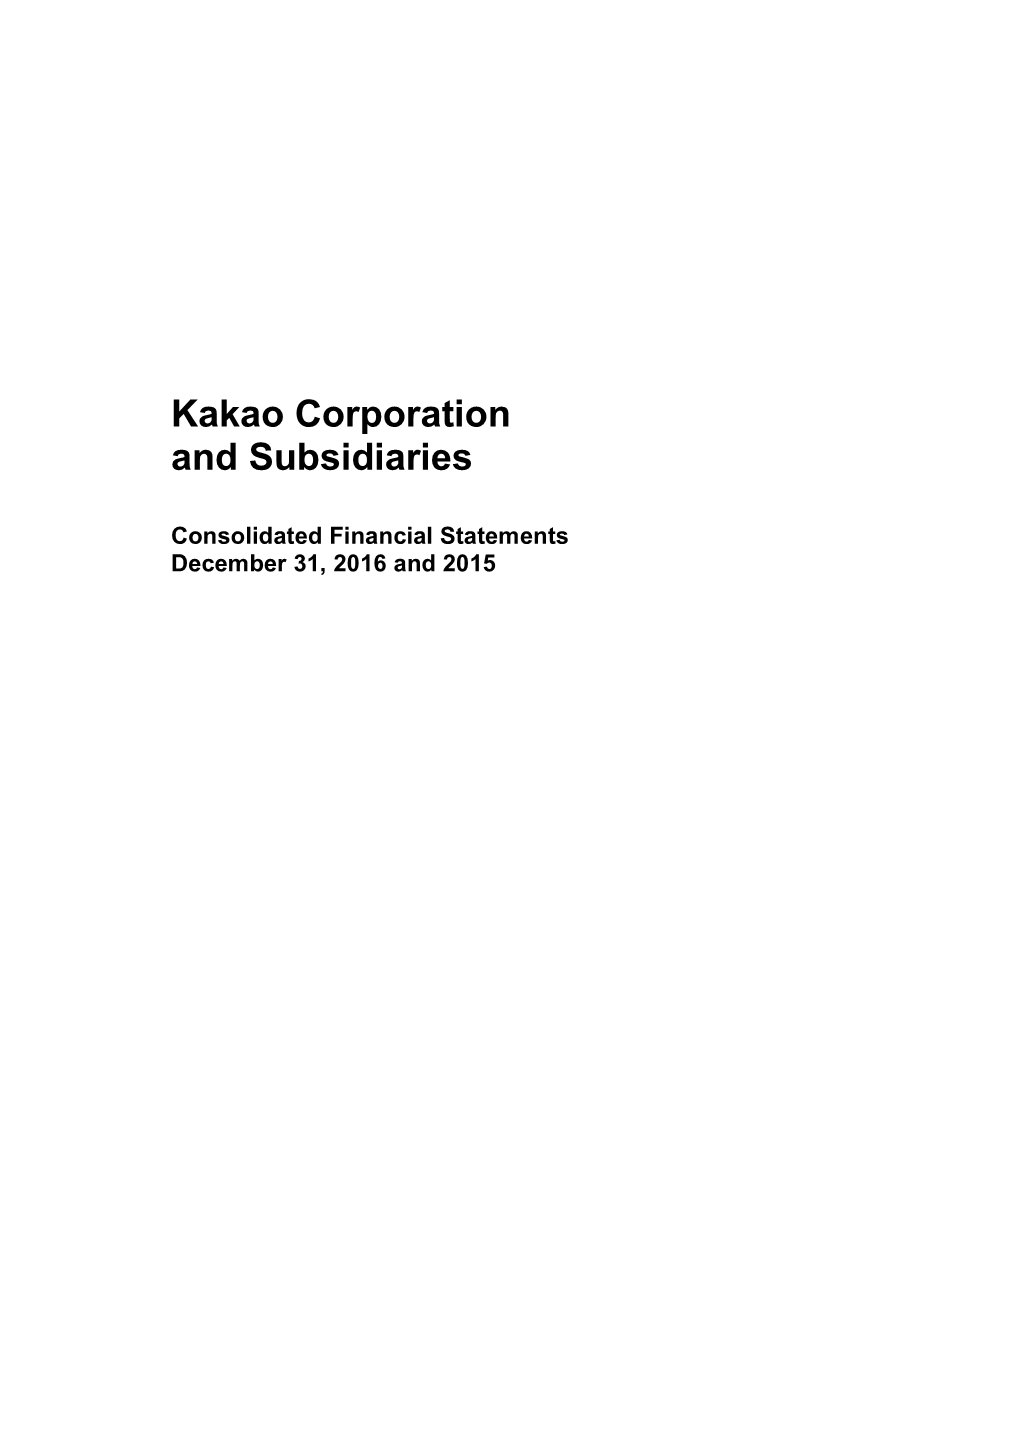 Kakao Corporation and Subsidiaries